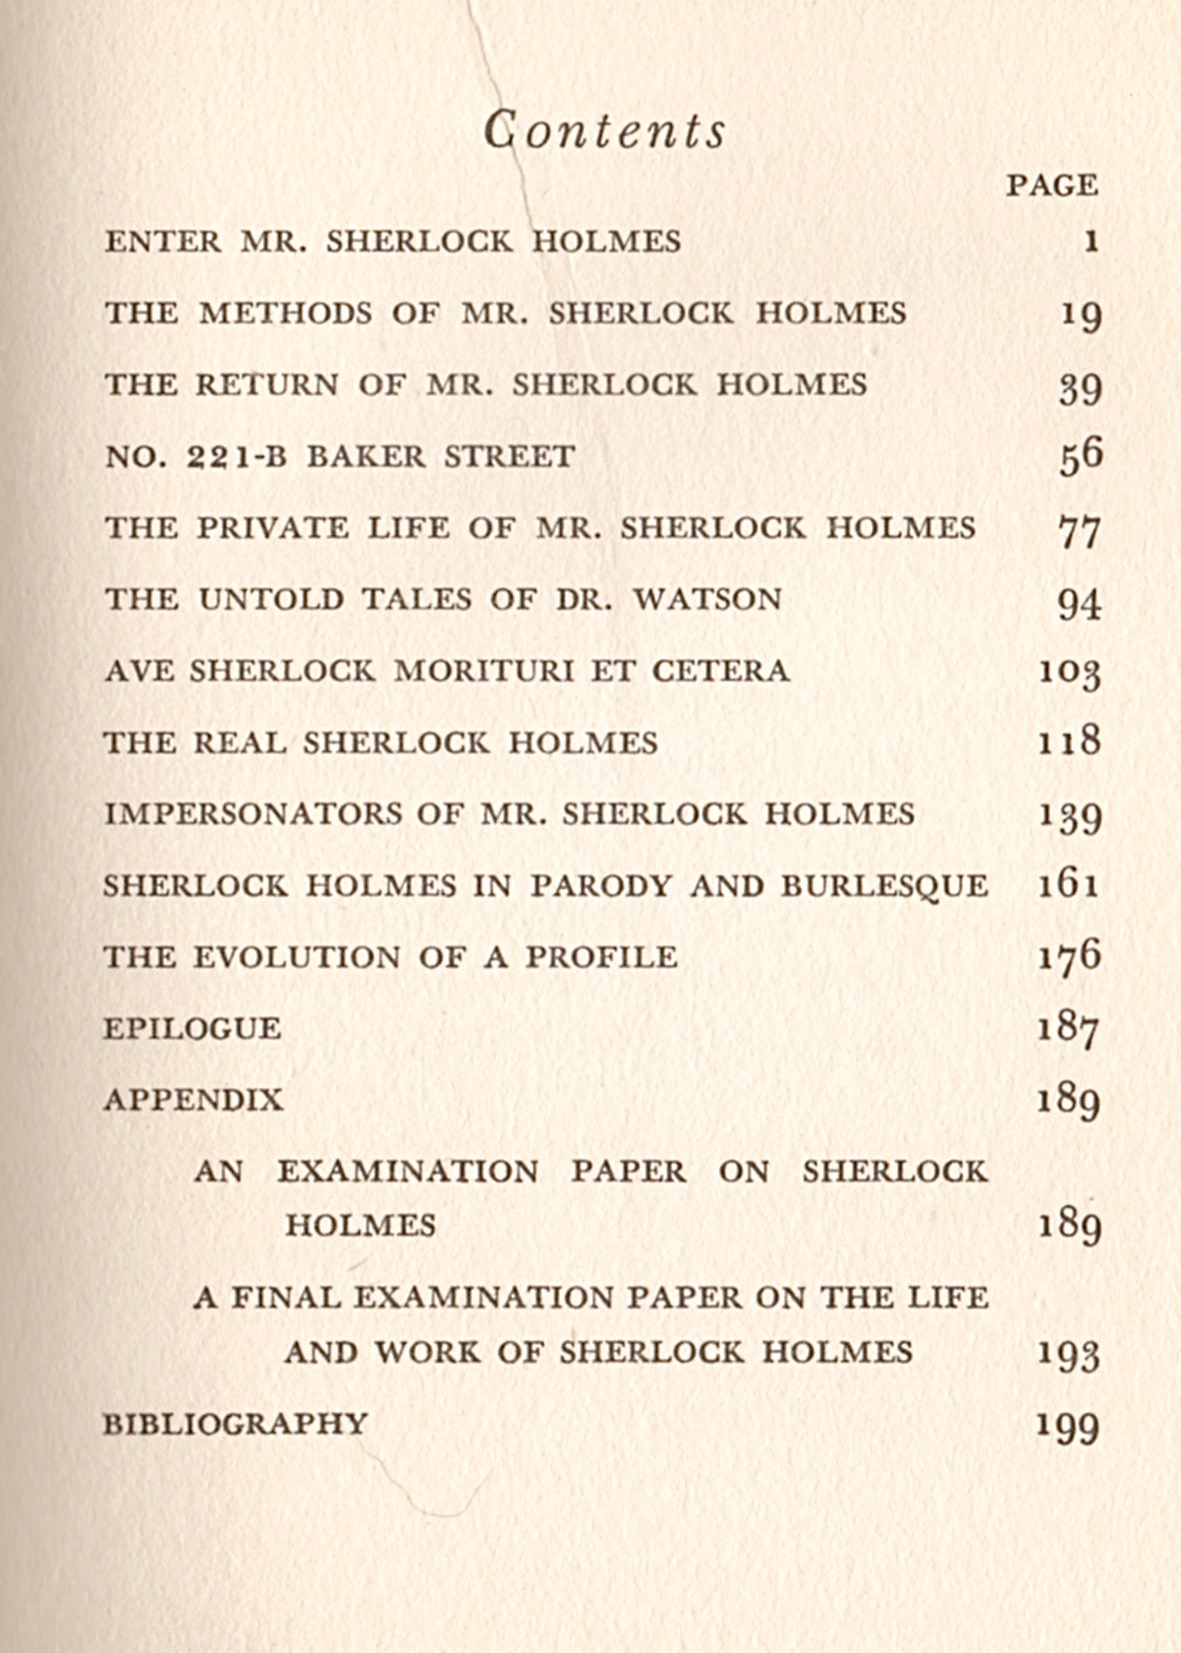 TPLOSH 1934 contents page.jpg